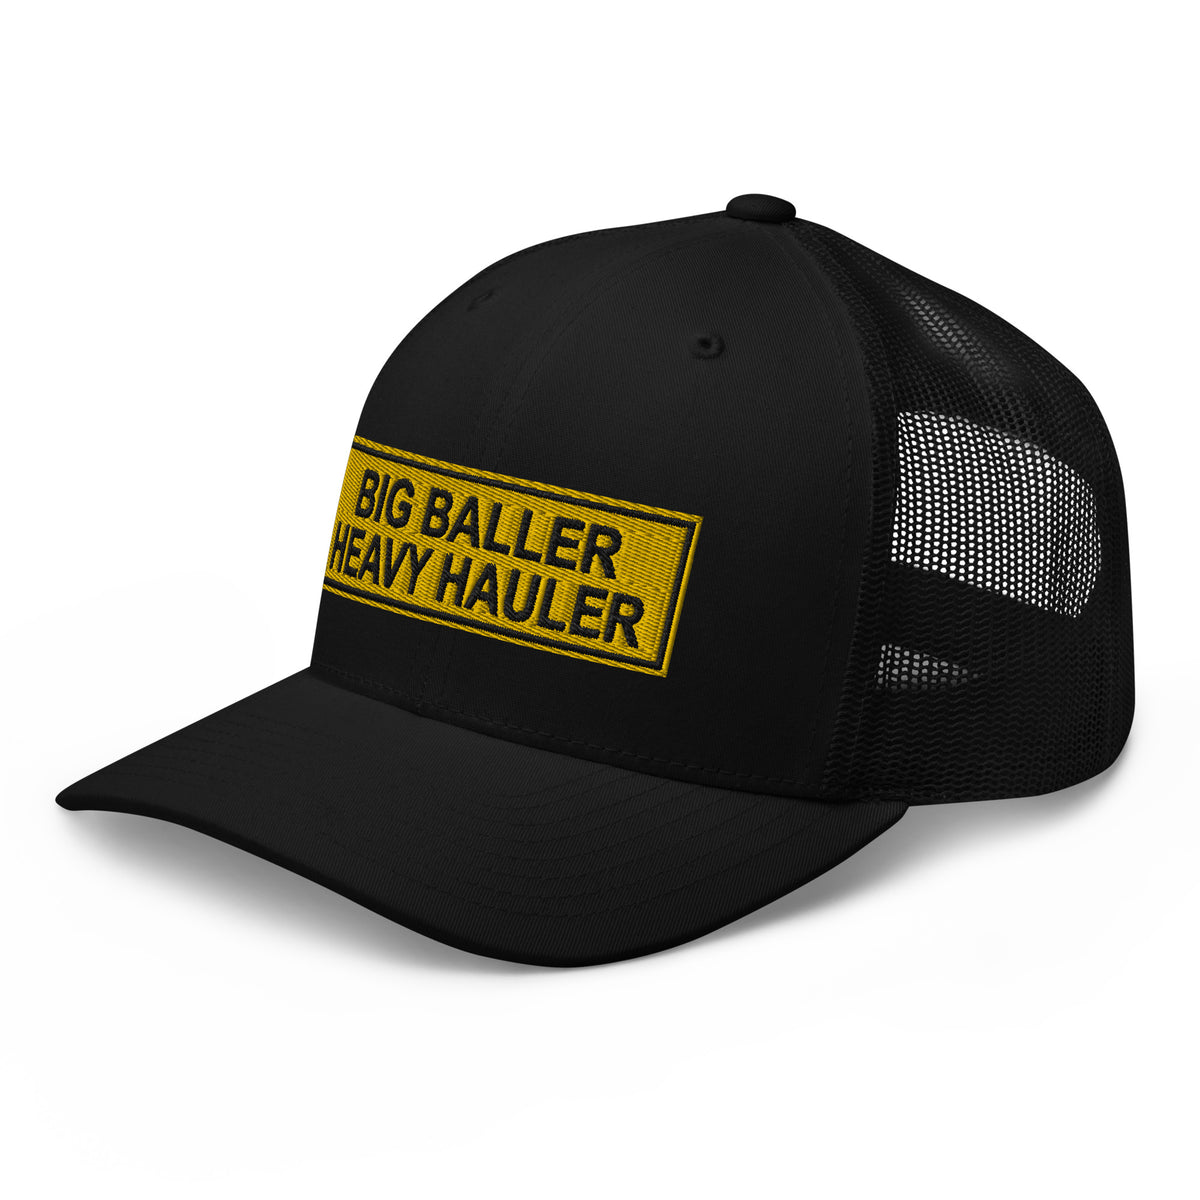 Big Baller Heavy Hauler - Snapback Hat - Free Shipping